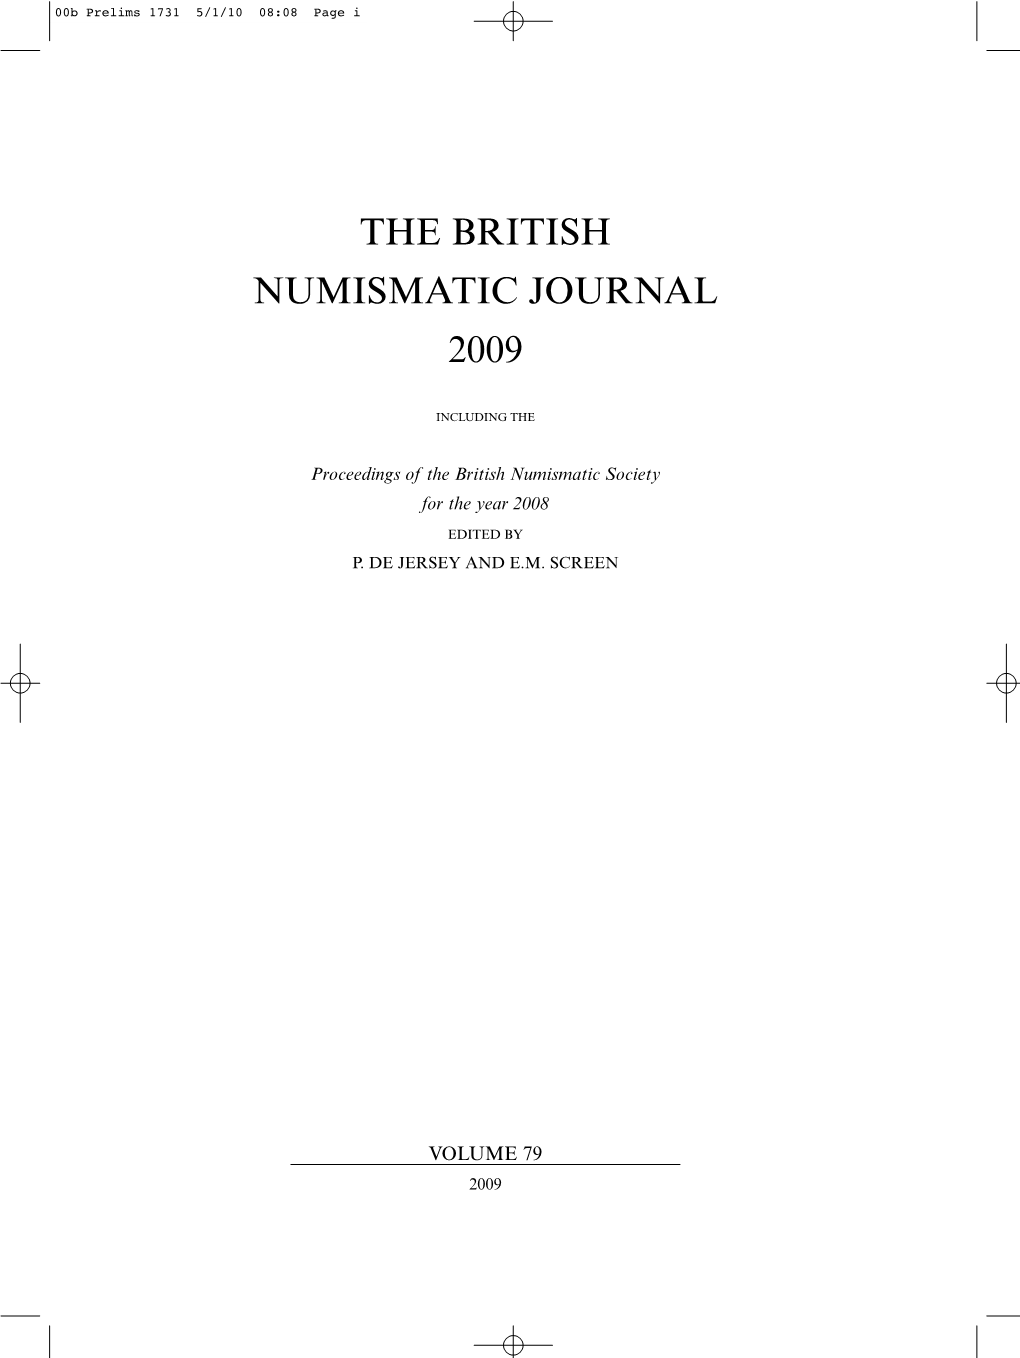 The British Numismatic Journal 2009